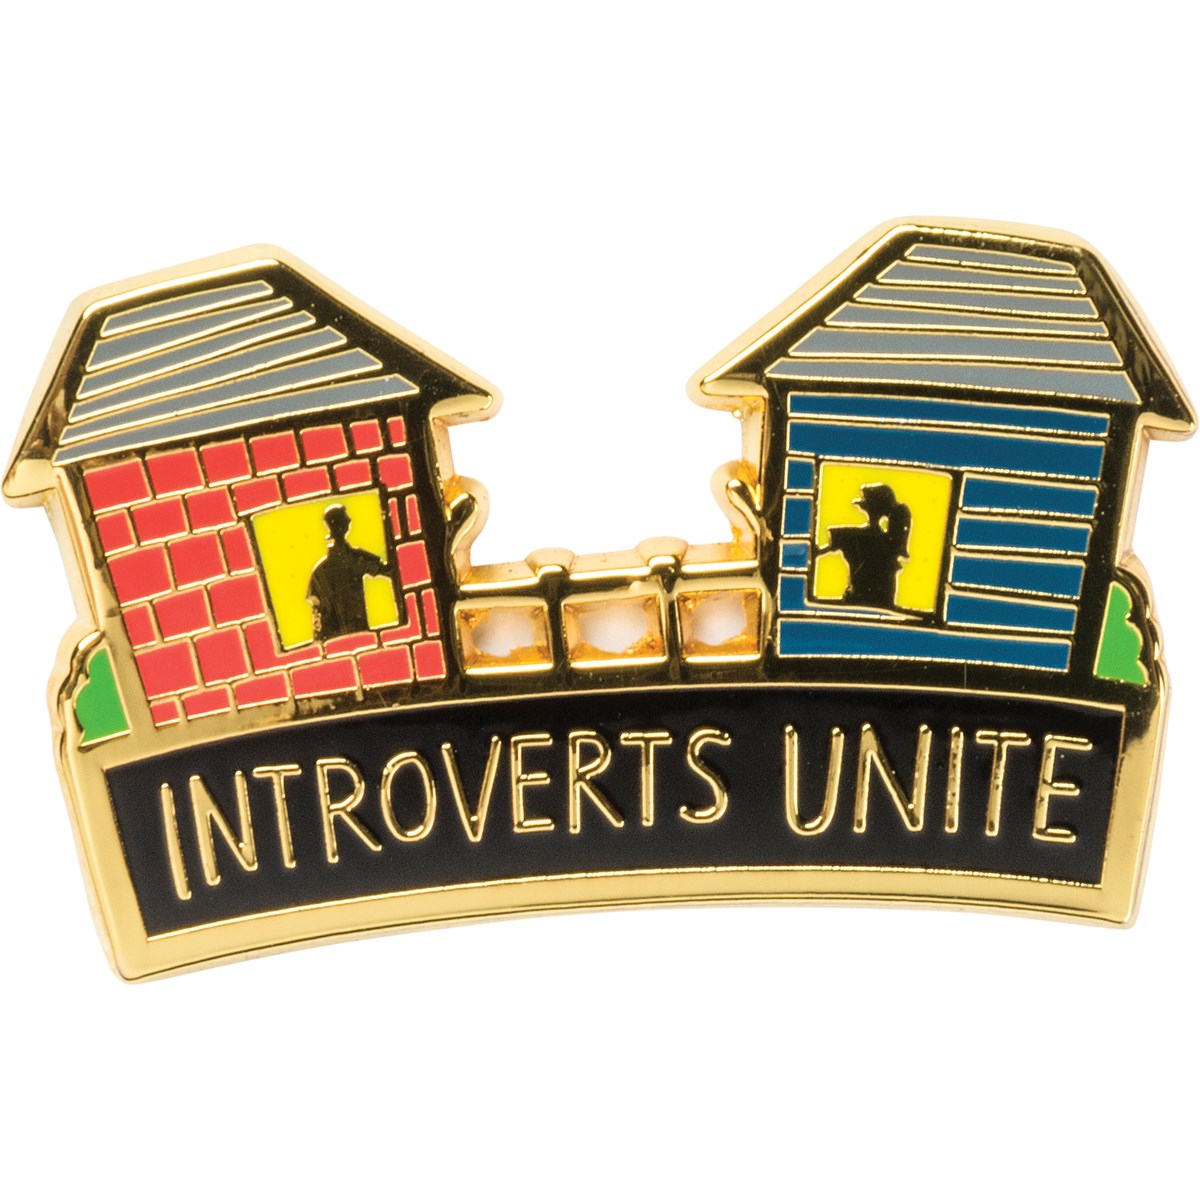 Introverts Unite! Enamel Pin - Metal, Enamel, Paper